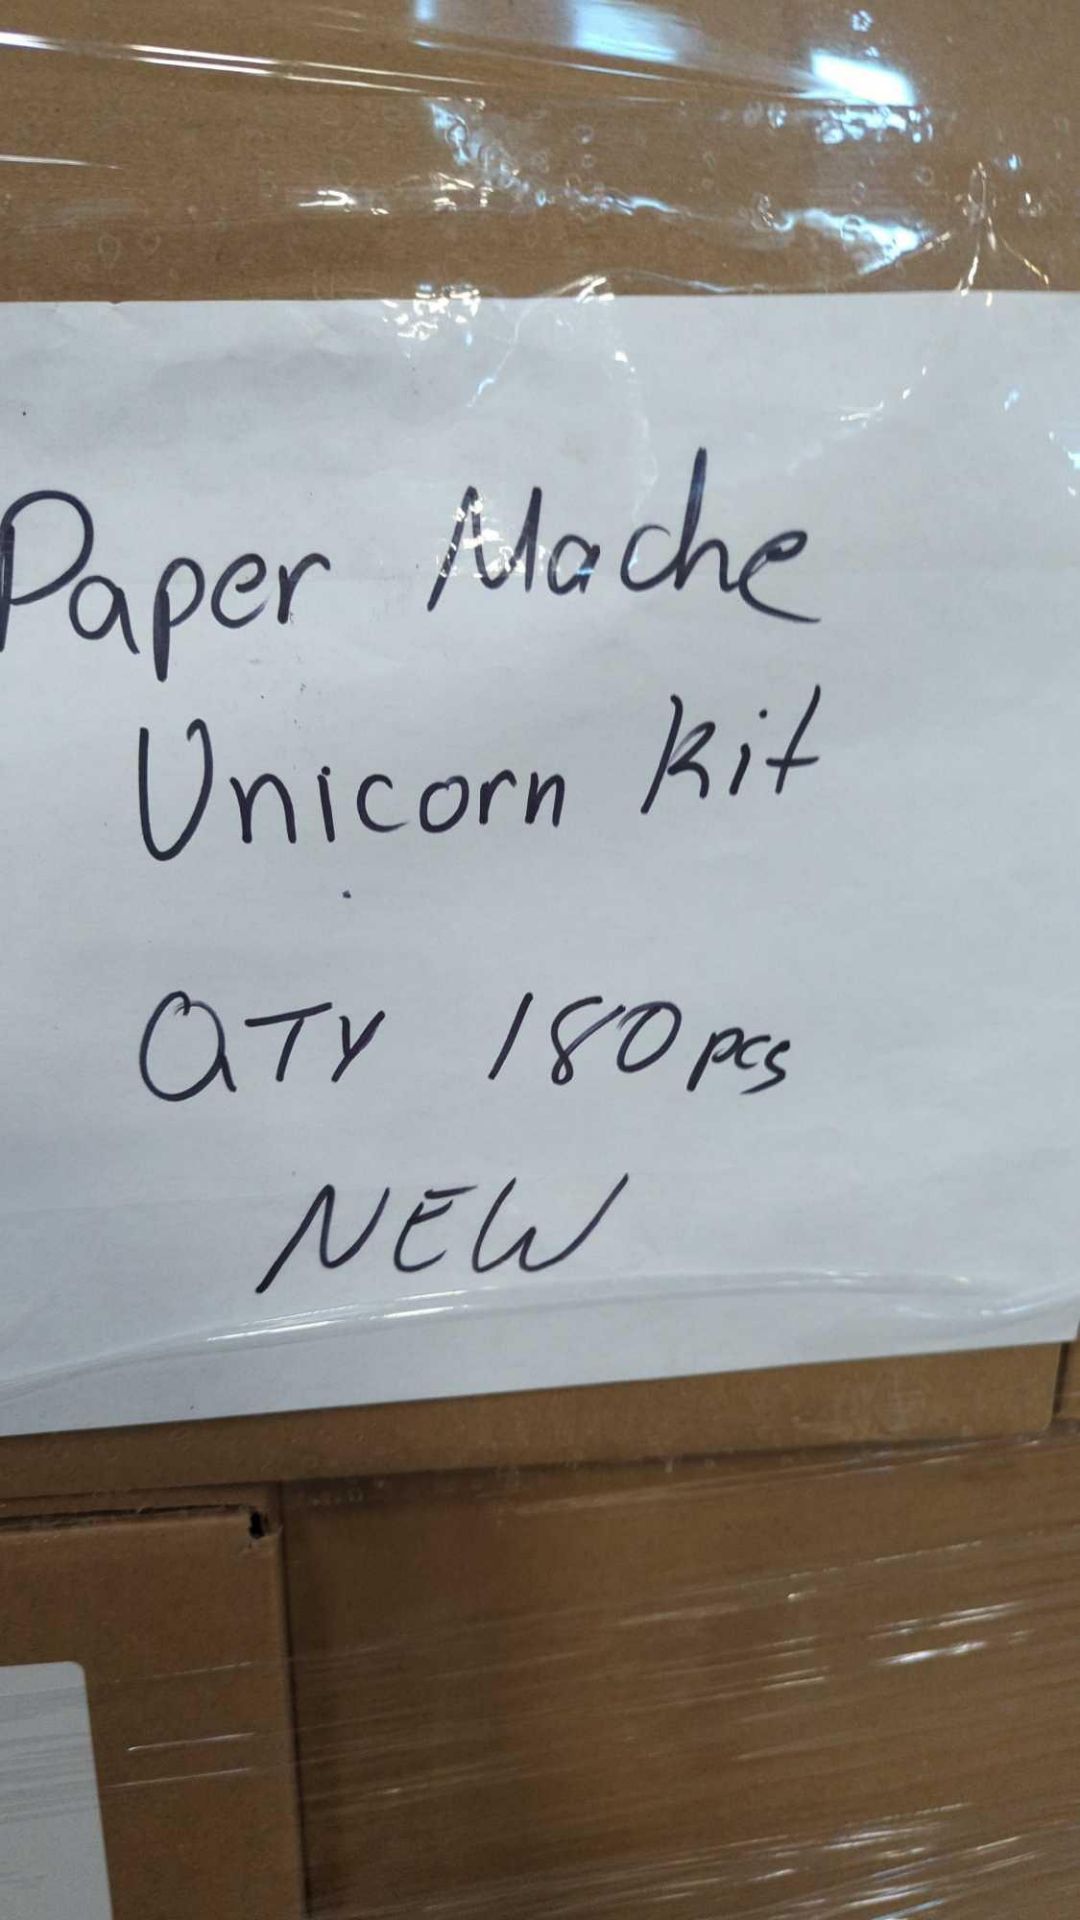 paper machine unicorn kits - Image 5 of 6